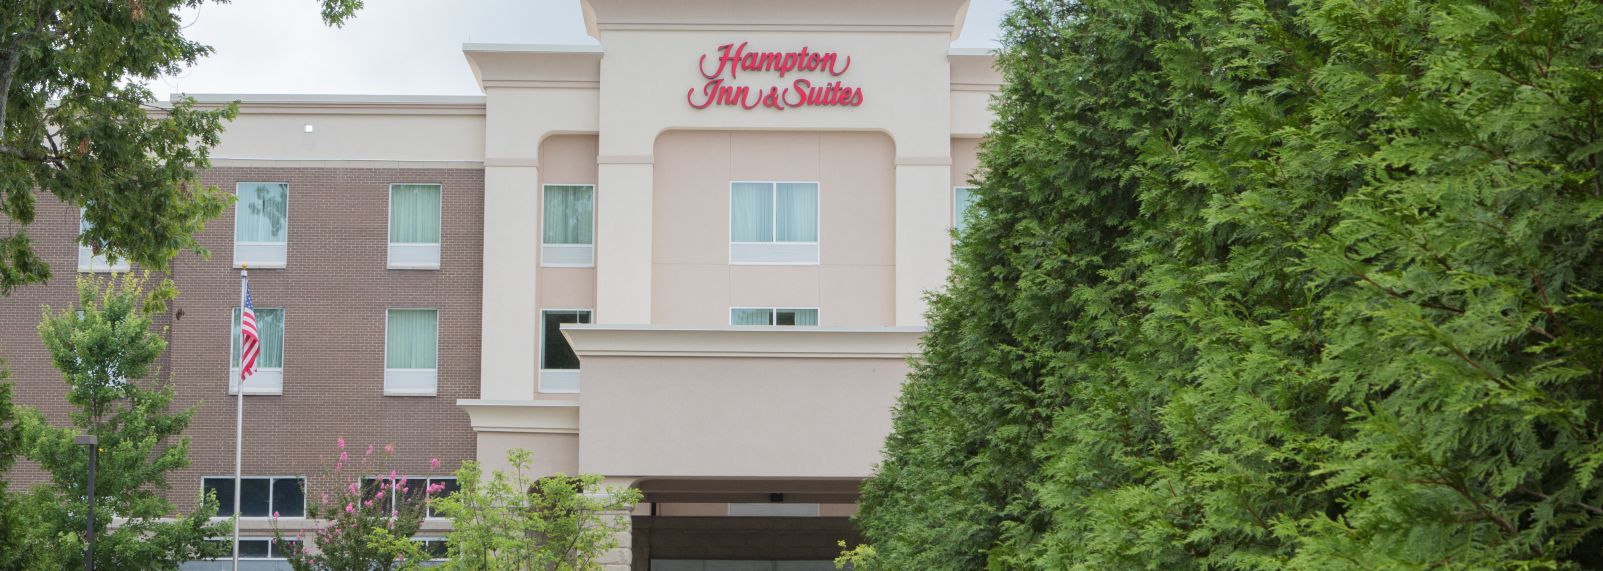 Hampton_Inn_Suites.JPG